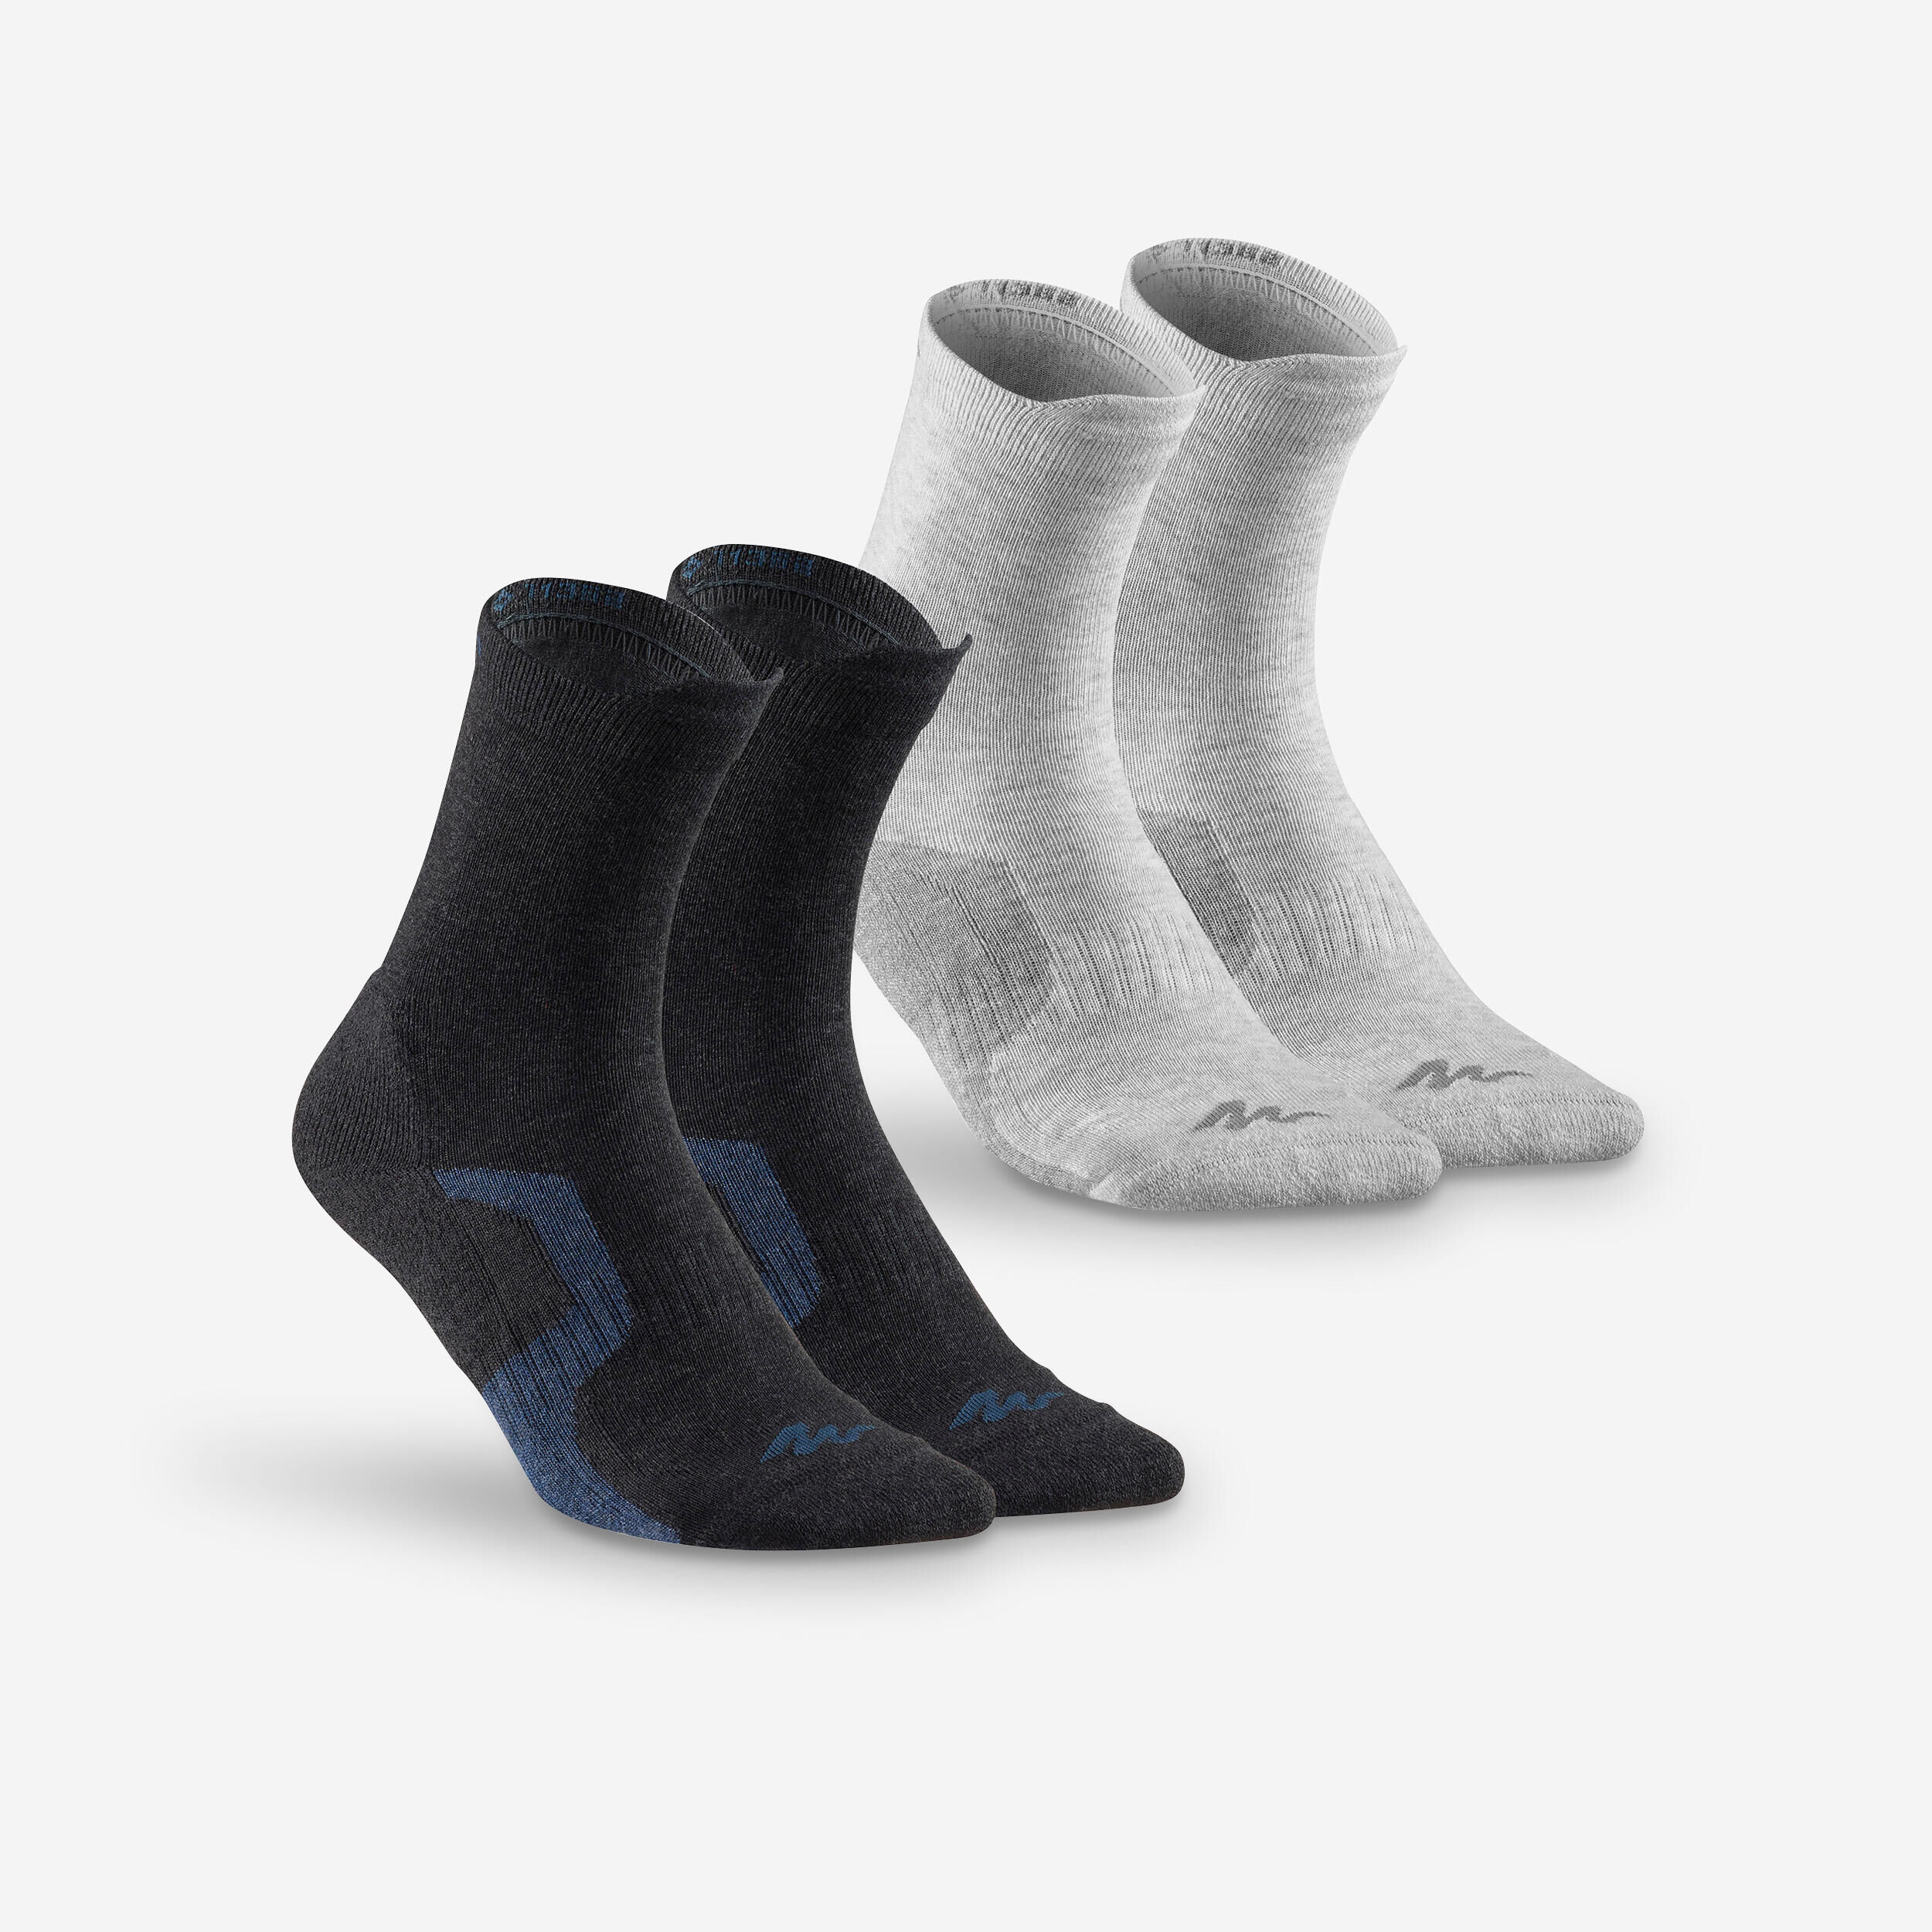 QUECHUA Kid’s High-Top Walking Socks 2 Pairs Crossocks Black Grey